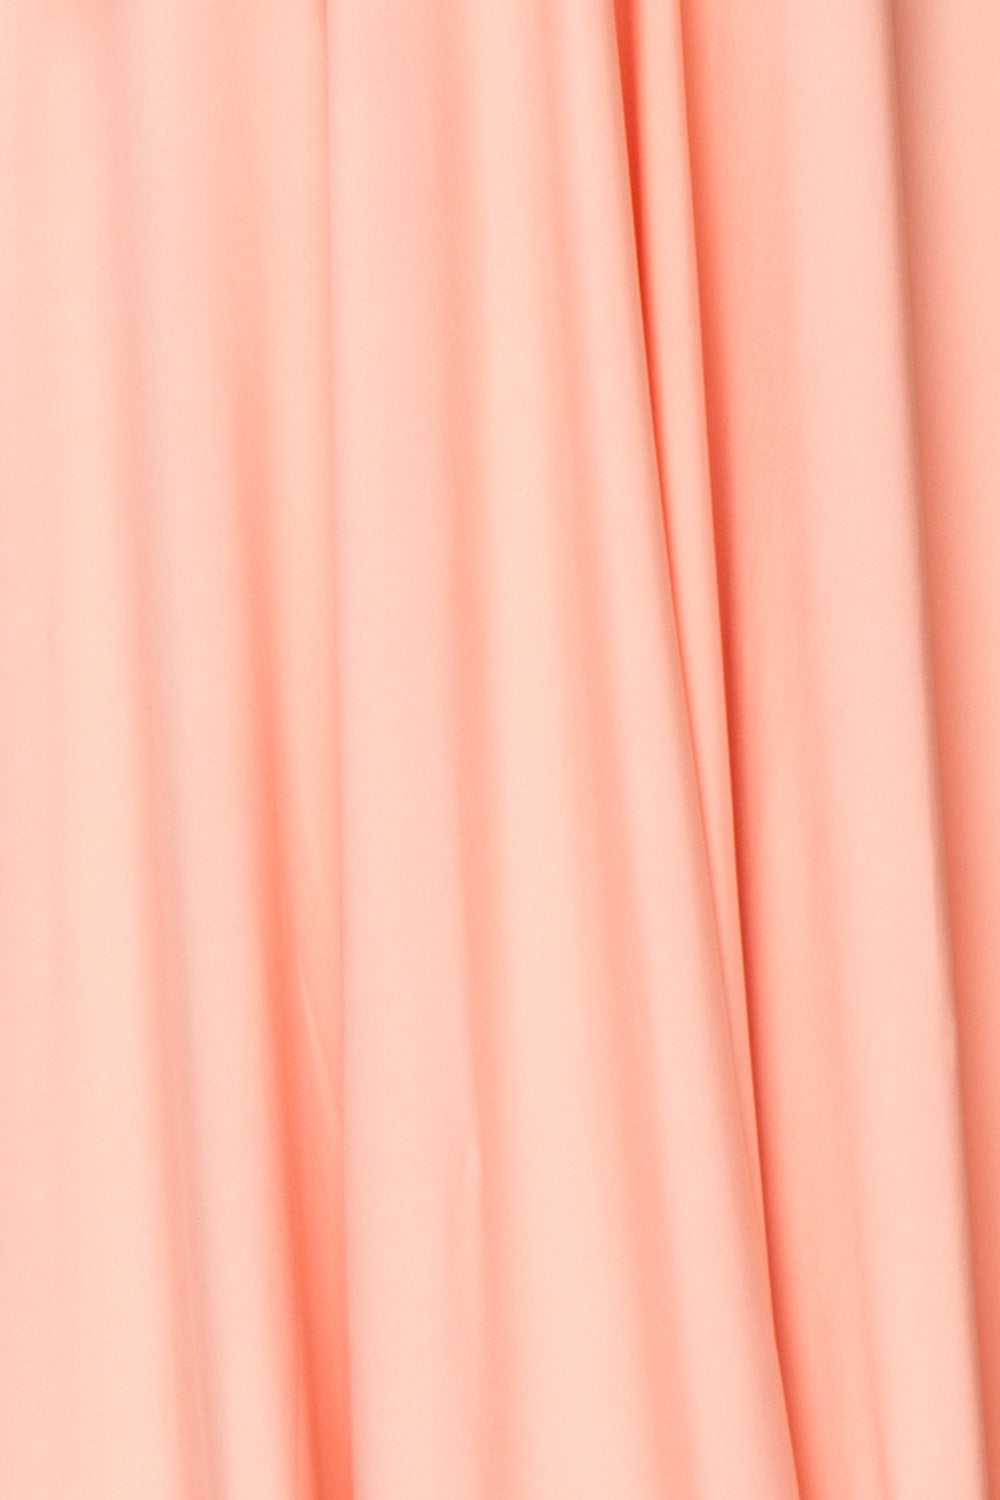 Elatia Blush Light Pink Convertible Dress fabric detail | Boudoir 1861 fabric detail 